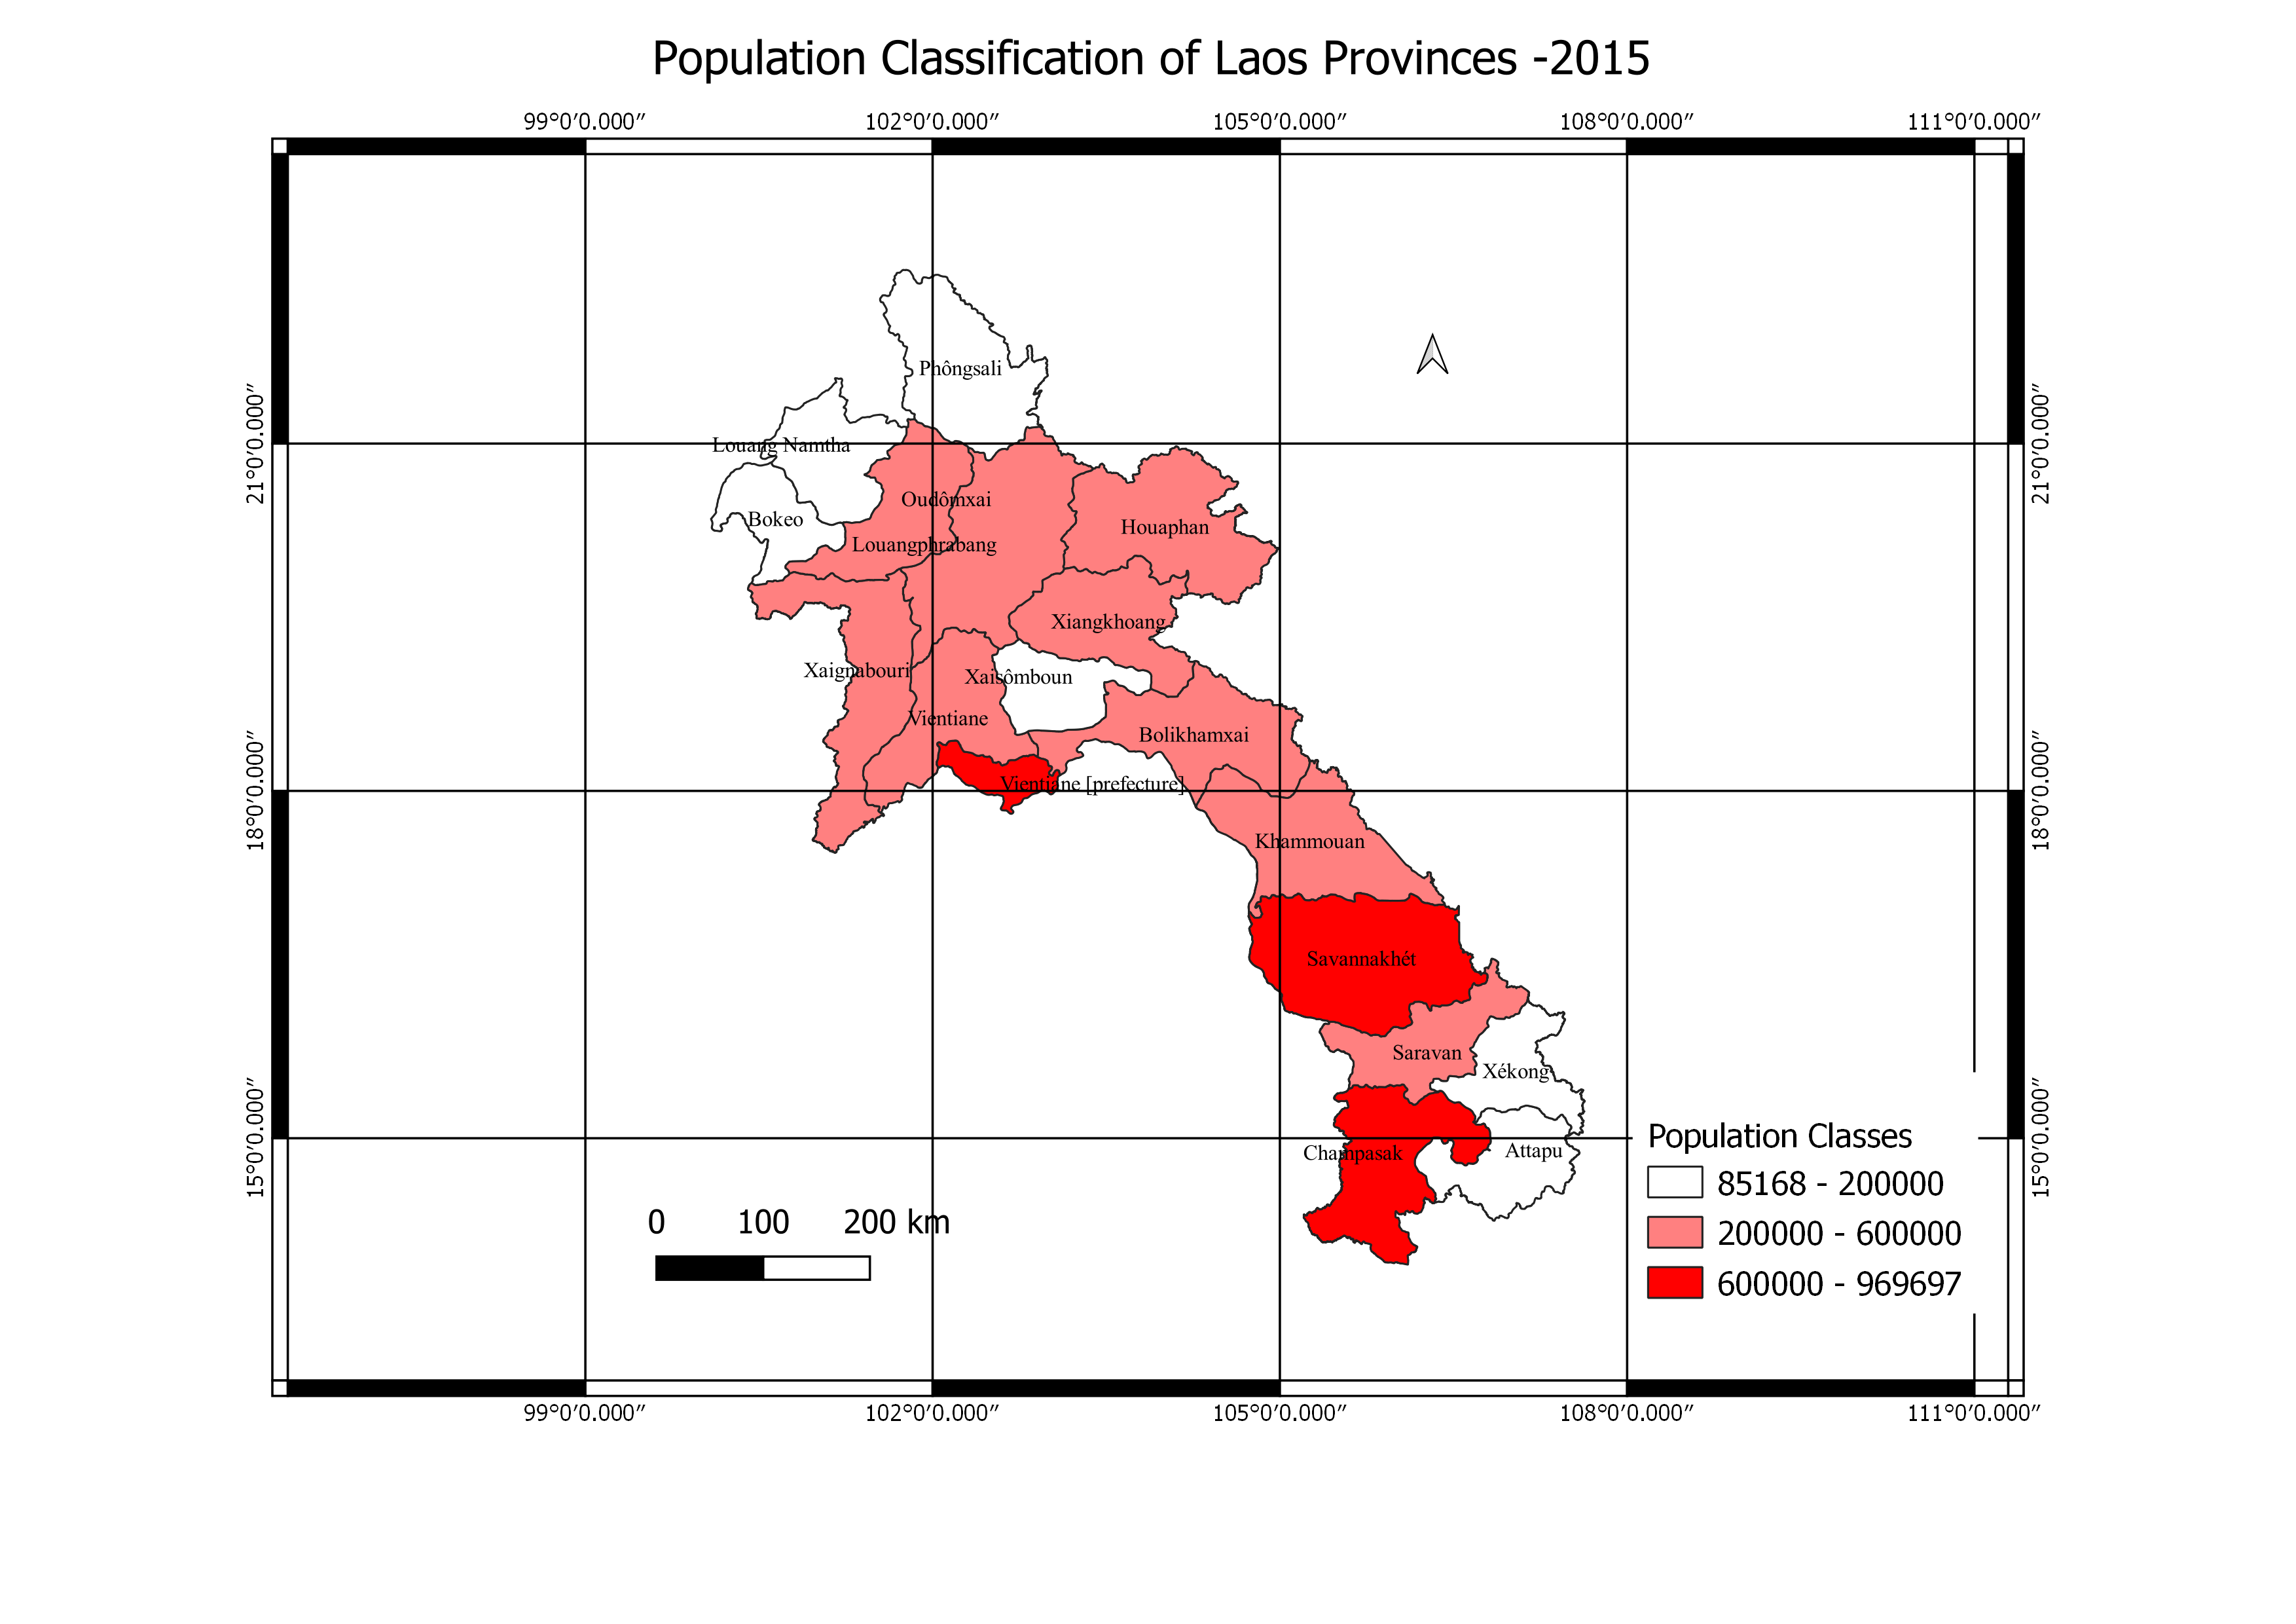 Population classification of Laos